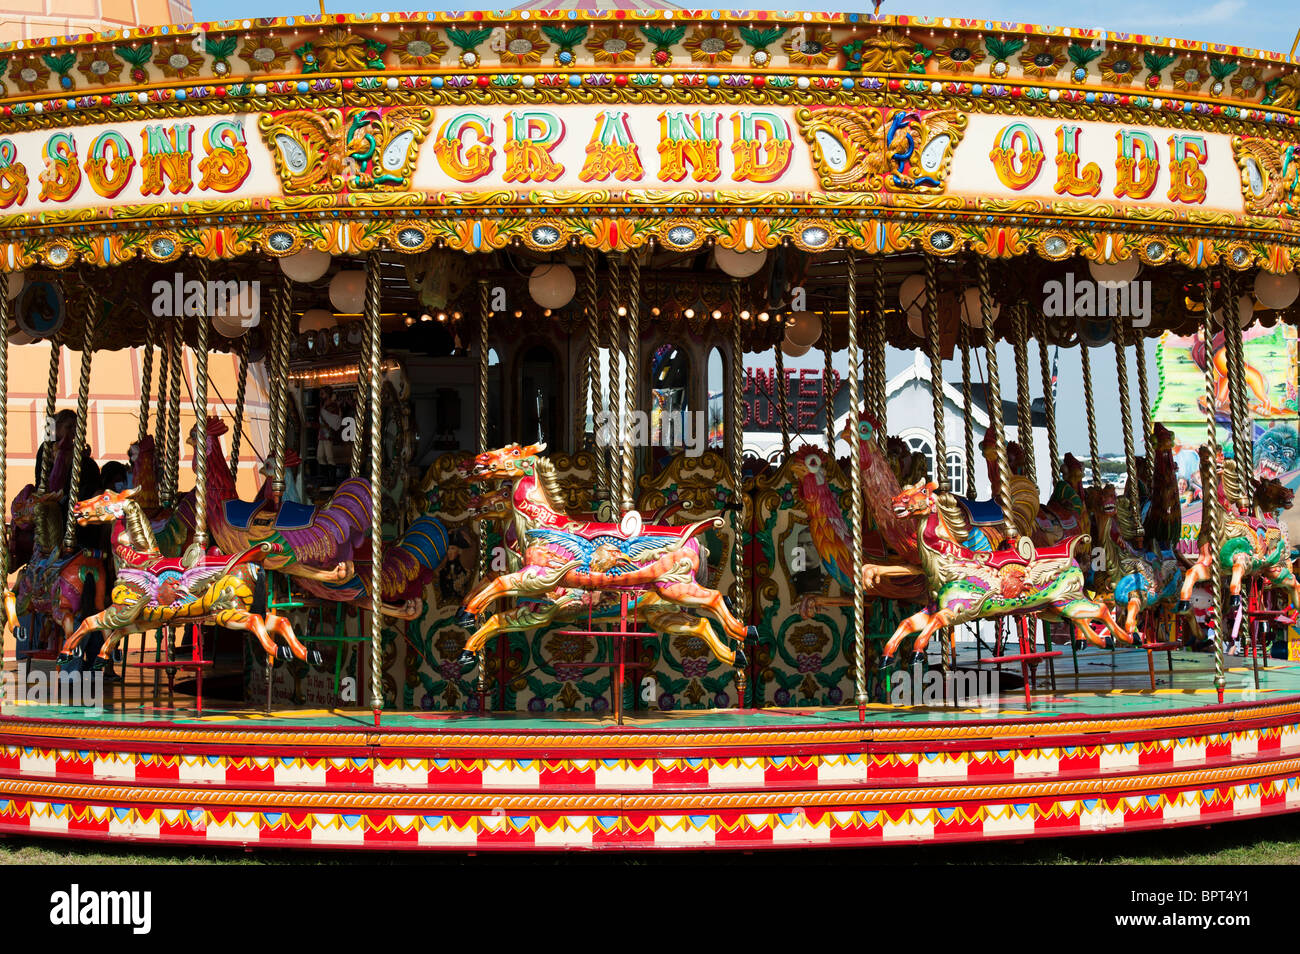 Steam Galloping horse carousel, fairground ride at the Great Dorset steam fair 2010, England Stock Photo